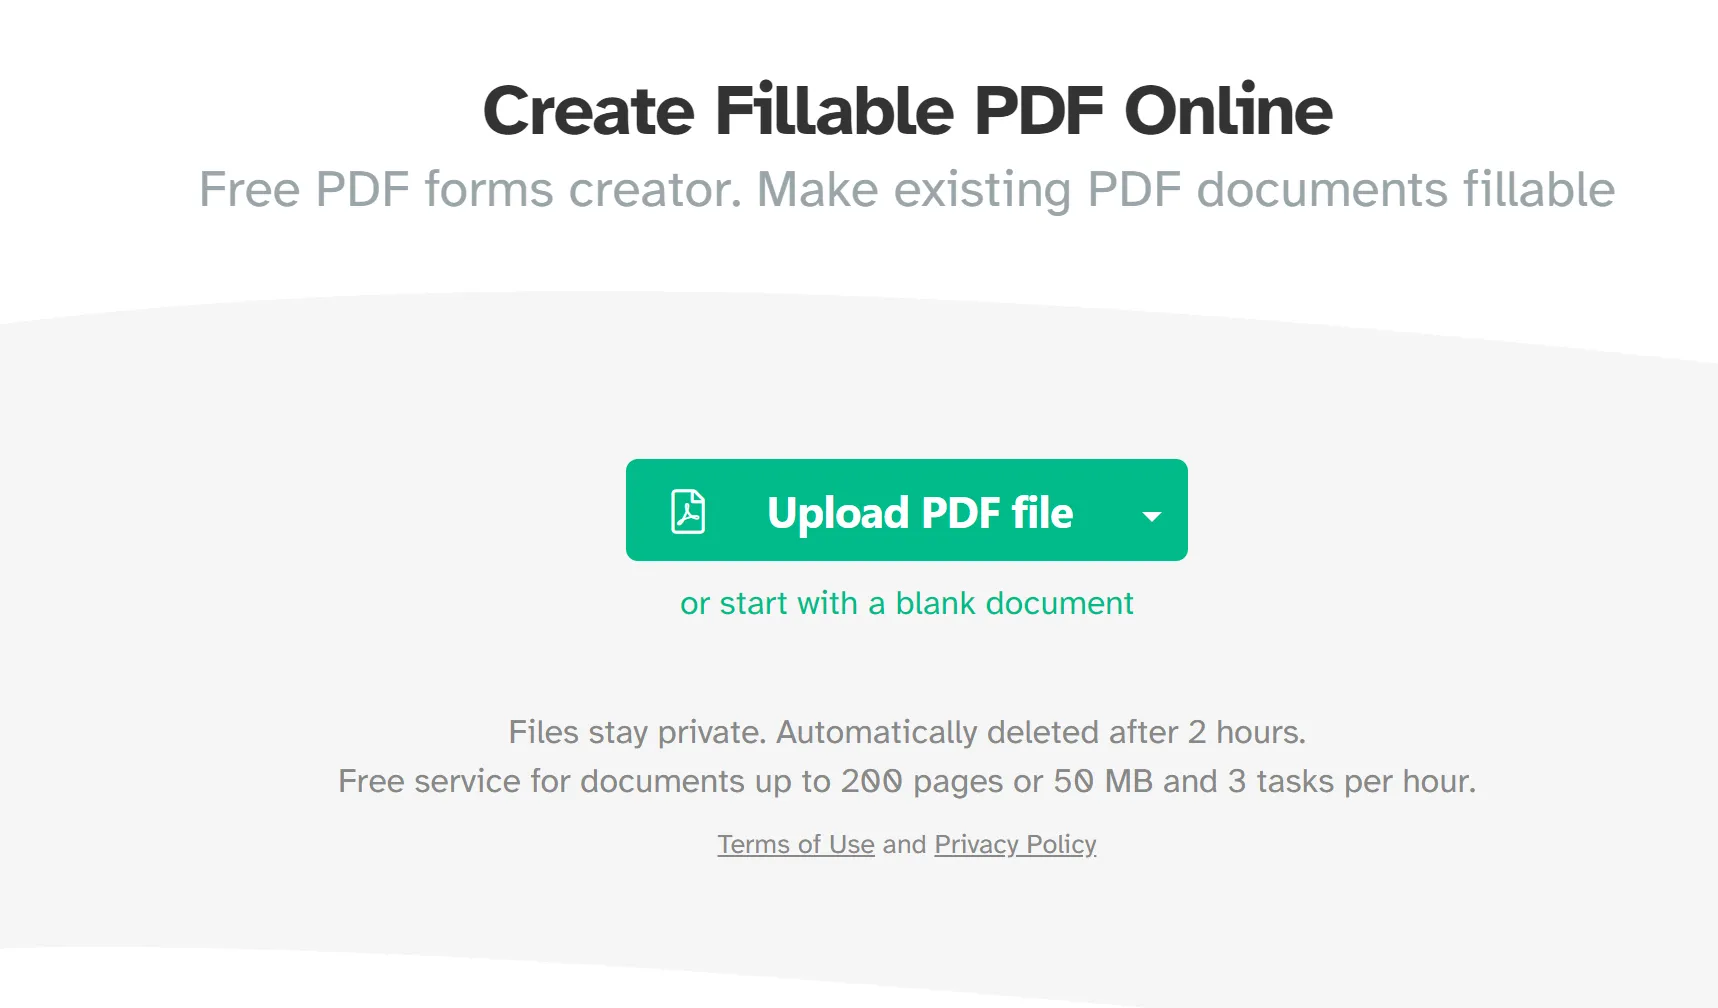 Create fillable PDF with Sejda